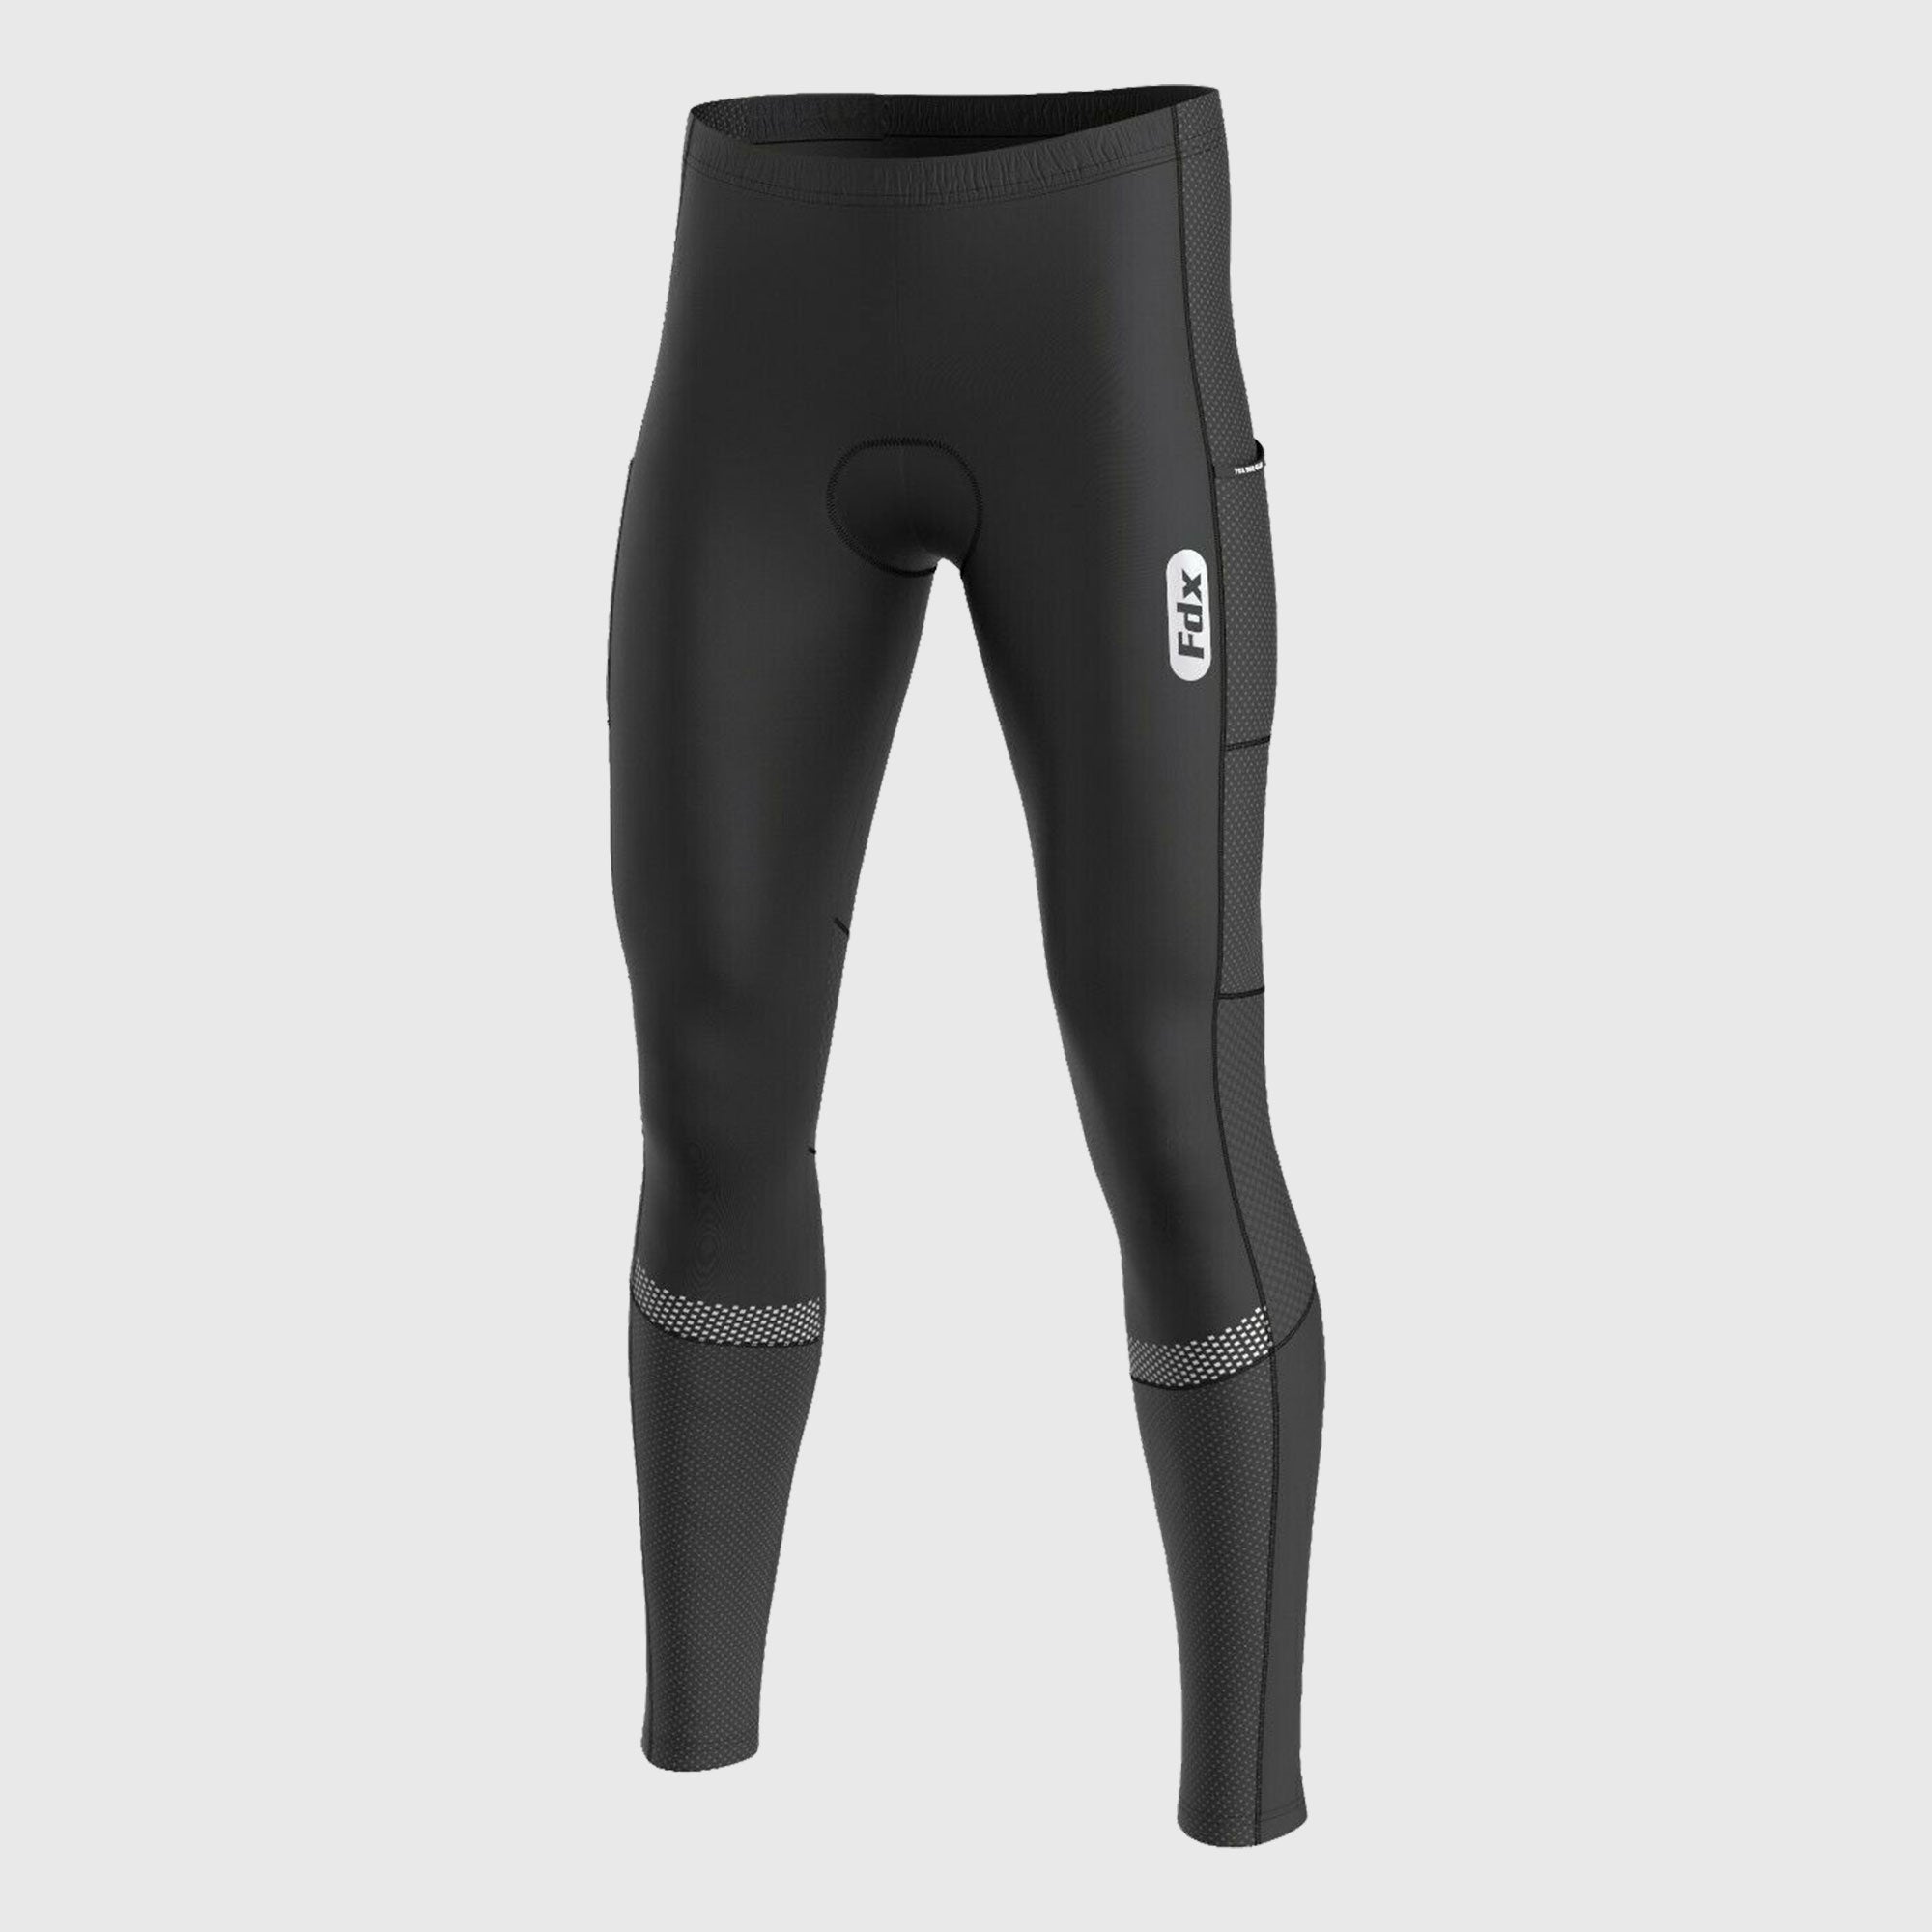 Fdx Men's Black Chamois Gel Padded Cycling Tights For Winter Roubaix Thermal Fleece Reflective Warm Leggings - All Day Bike Long Pants